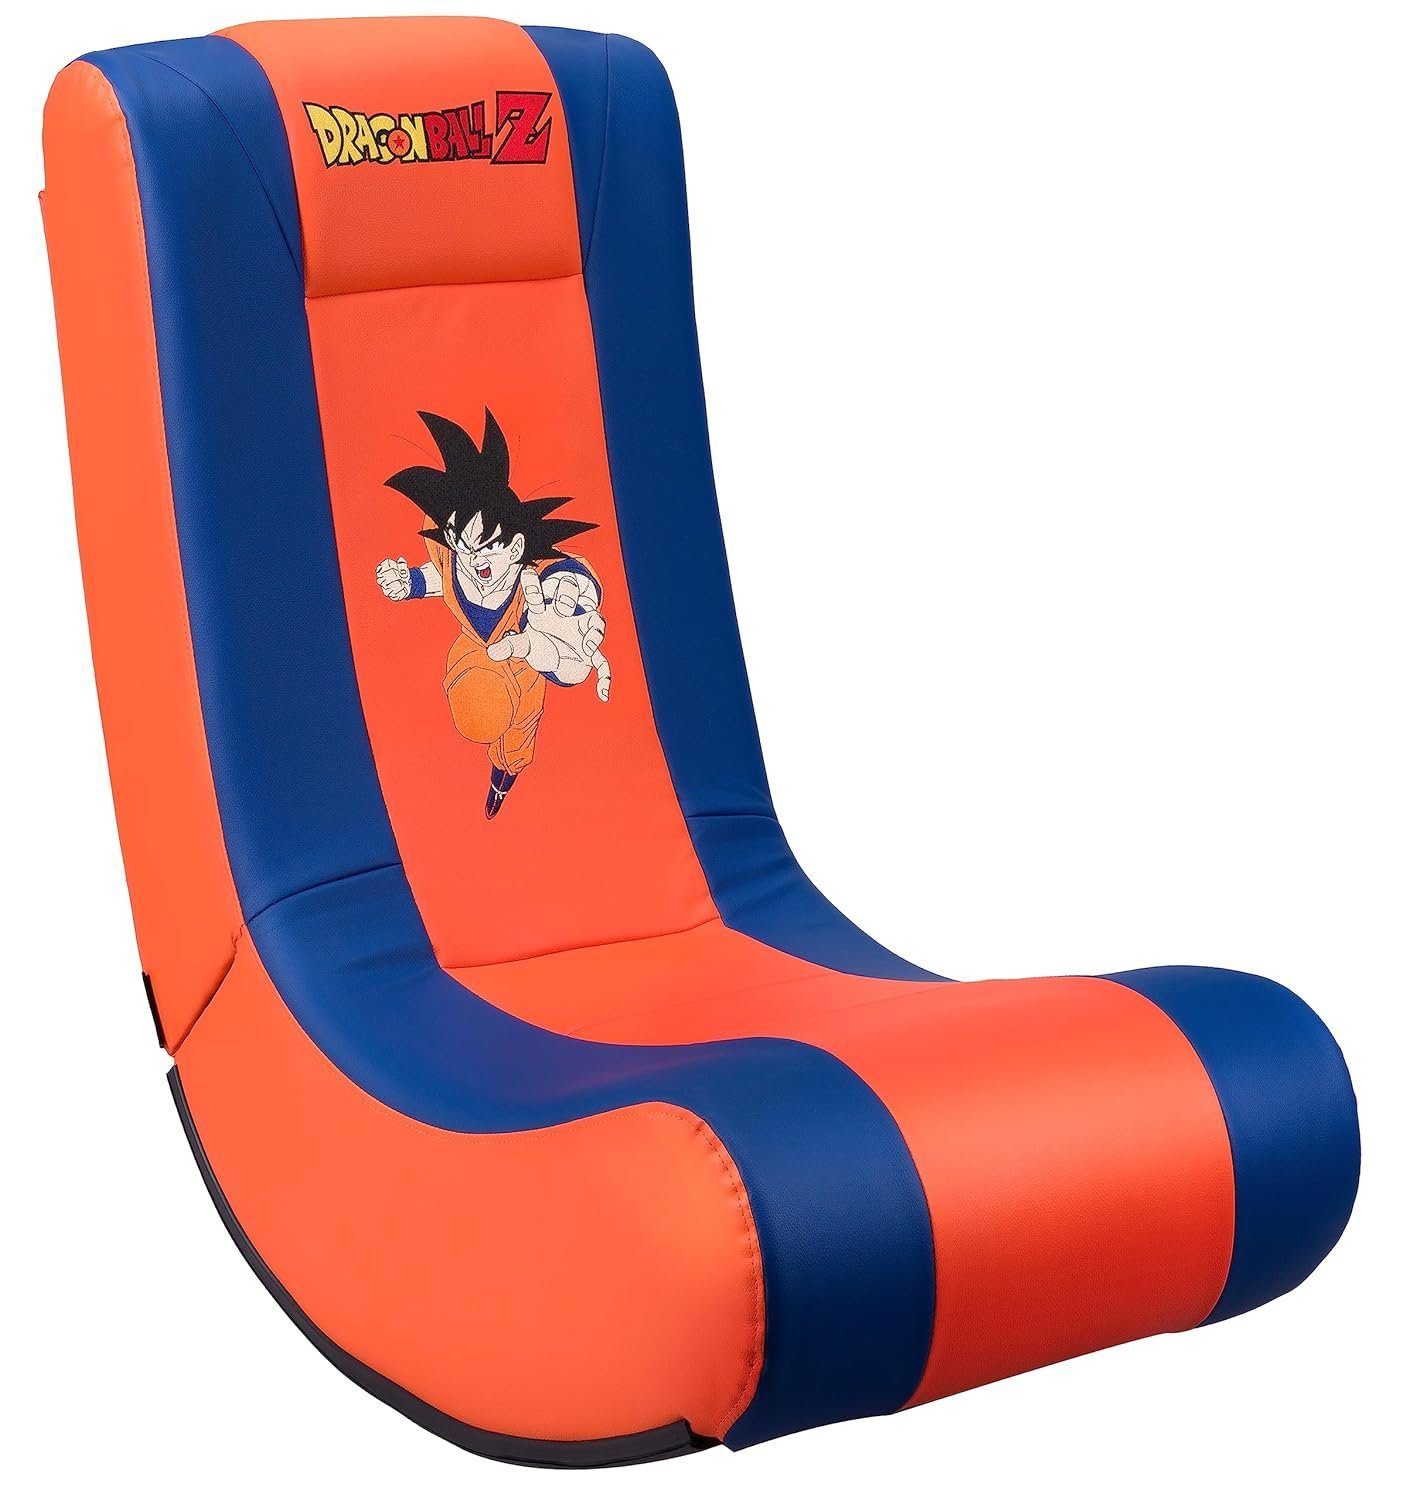 Subsonic Gaming-Stuhl Dragonball Z Junior Rock'n'Seat Gaming Stuhl / Chair / Sessel (1 St)